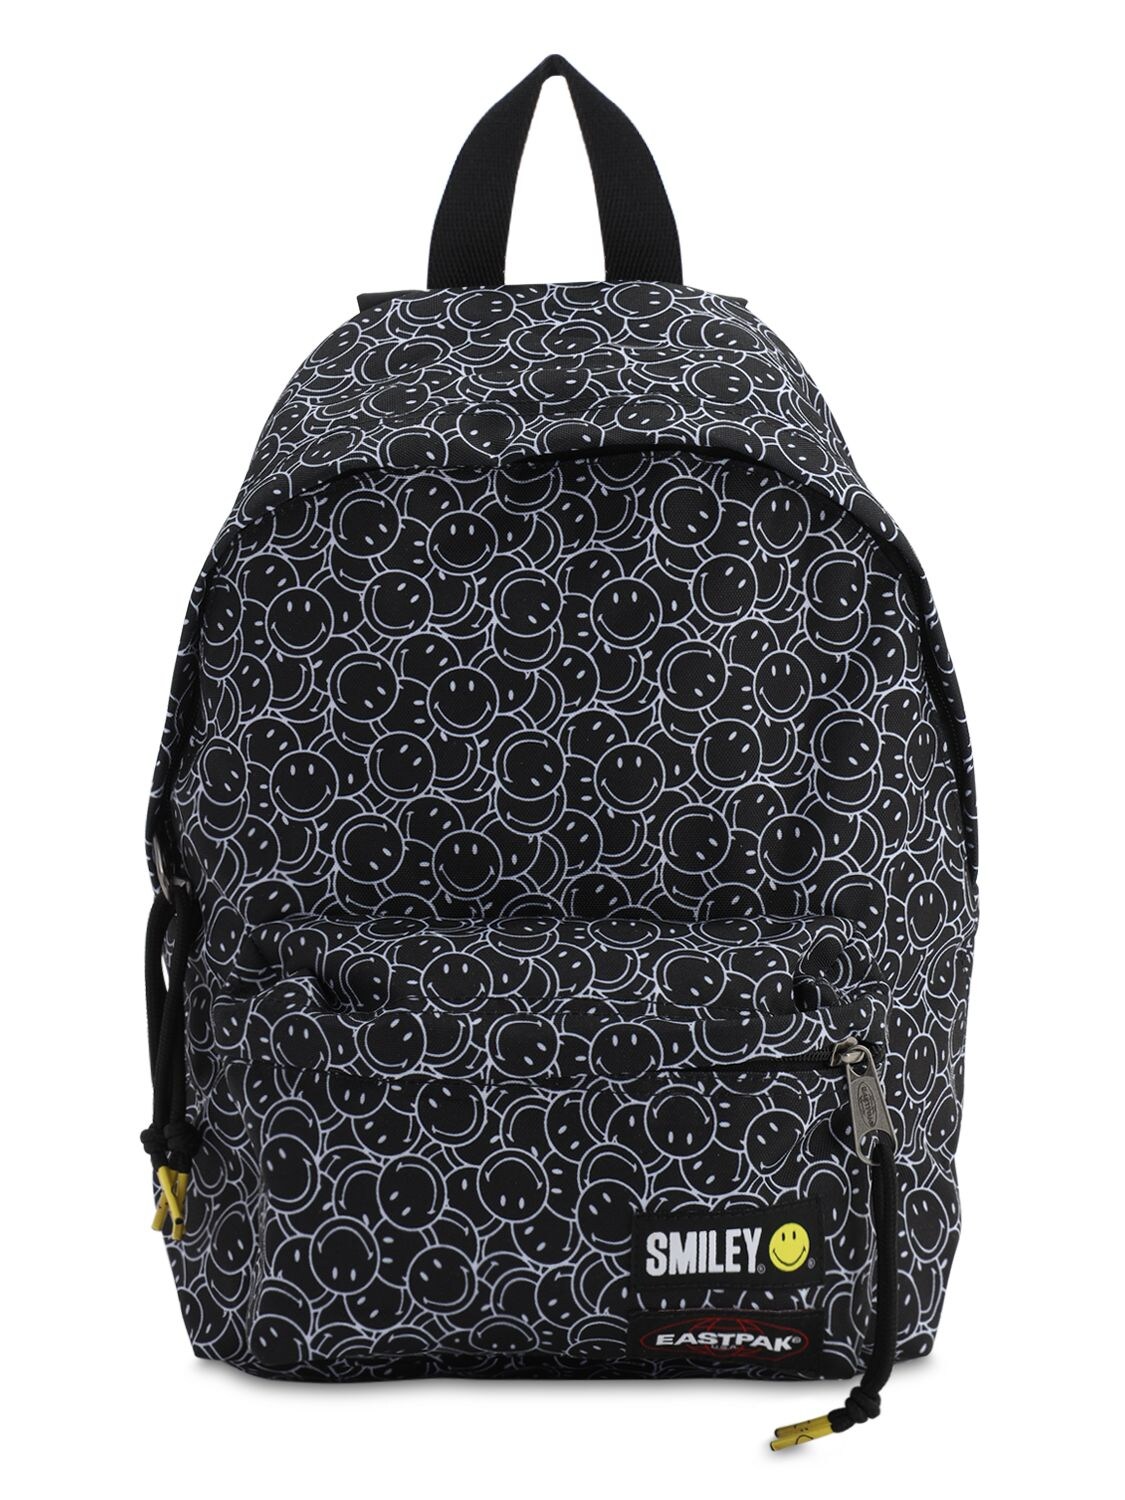 Eastpak 10l Orbit Smiley Backpack In Black